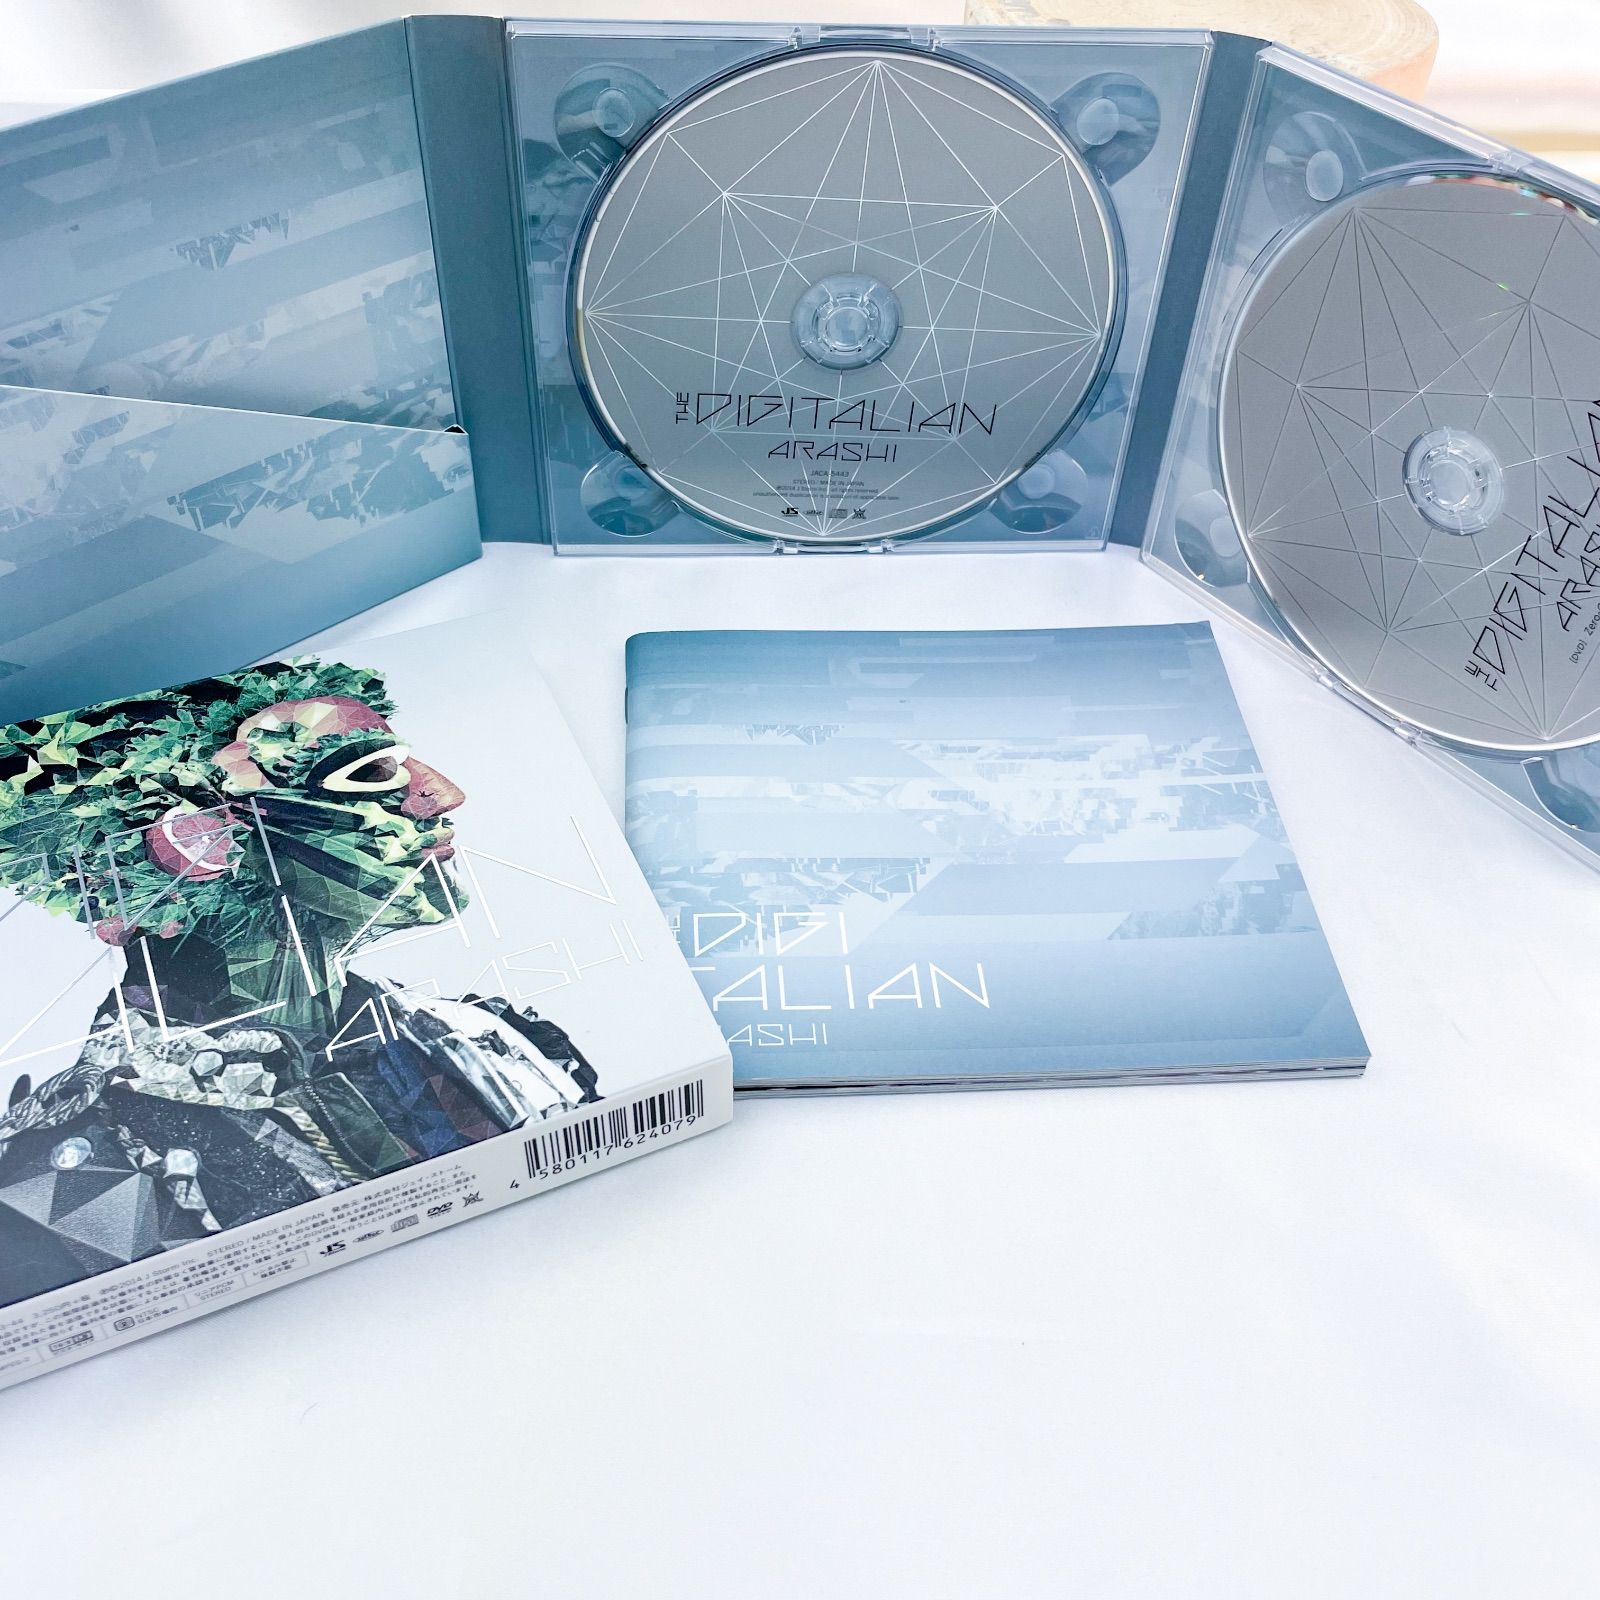 THE DIGITALIAN 初回限定盤 DVD 初回盤 CD セット (D) - メルカリ